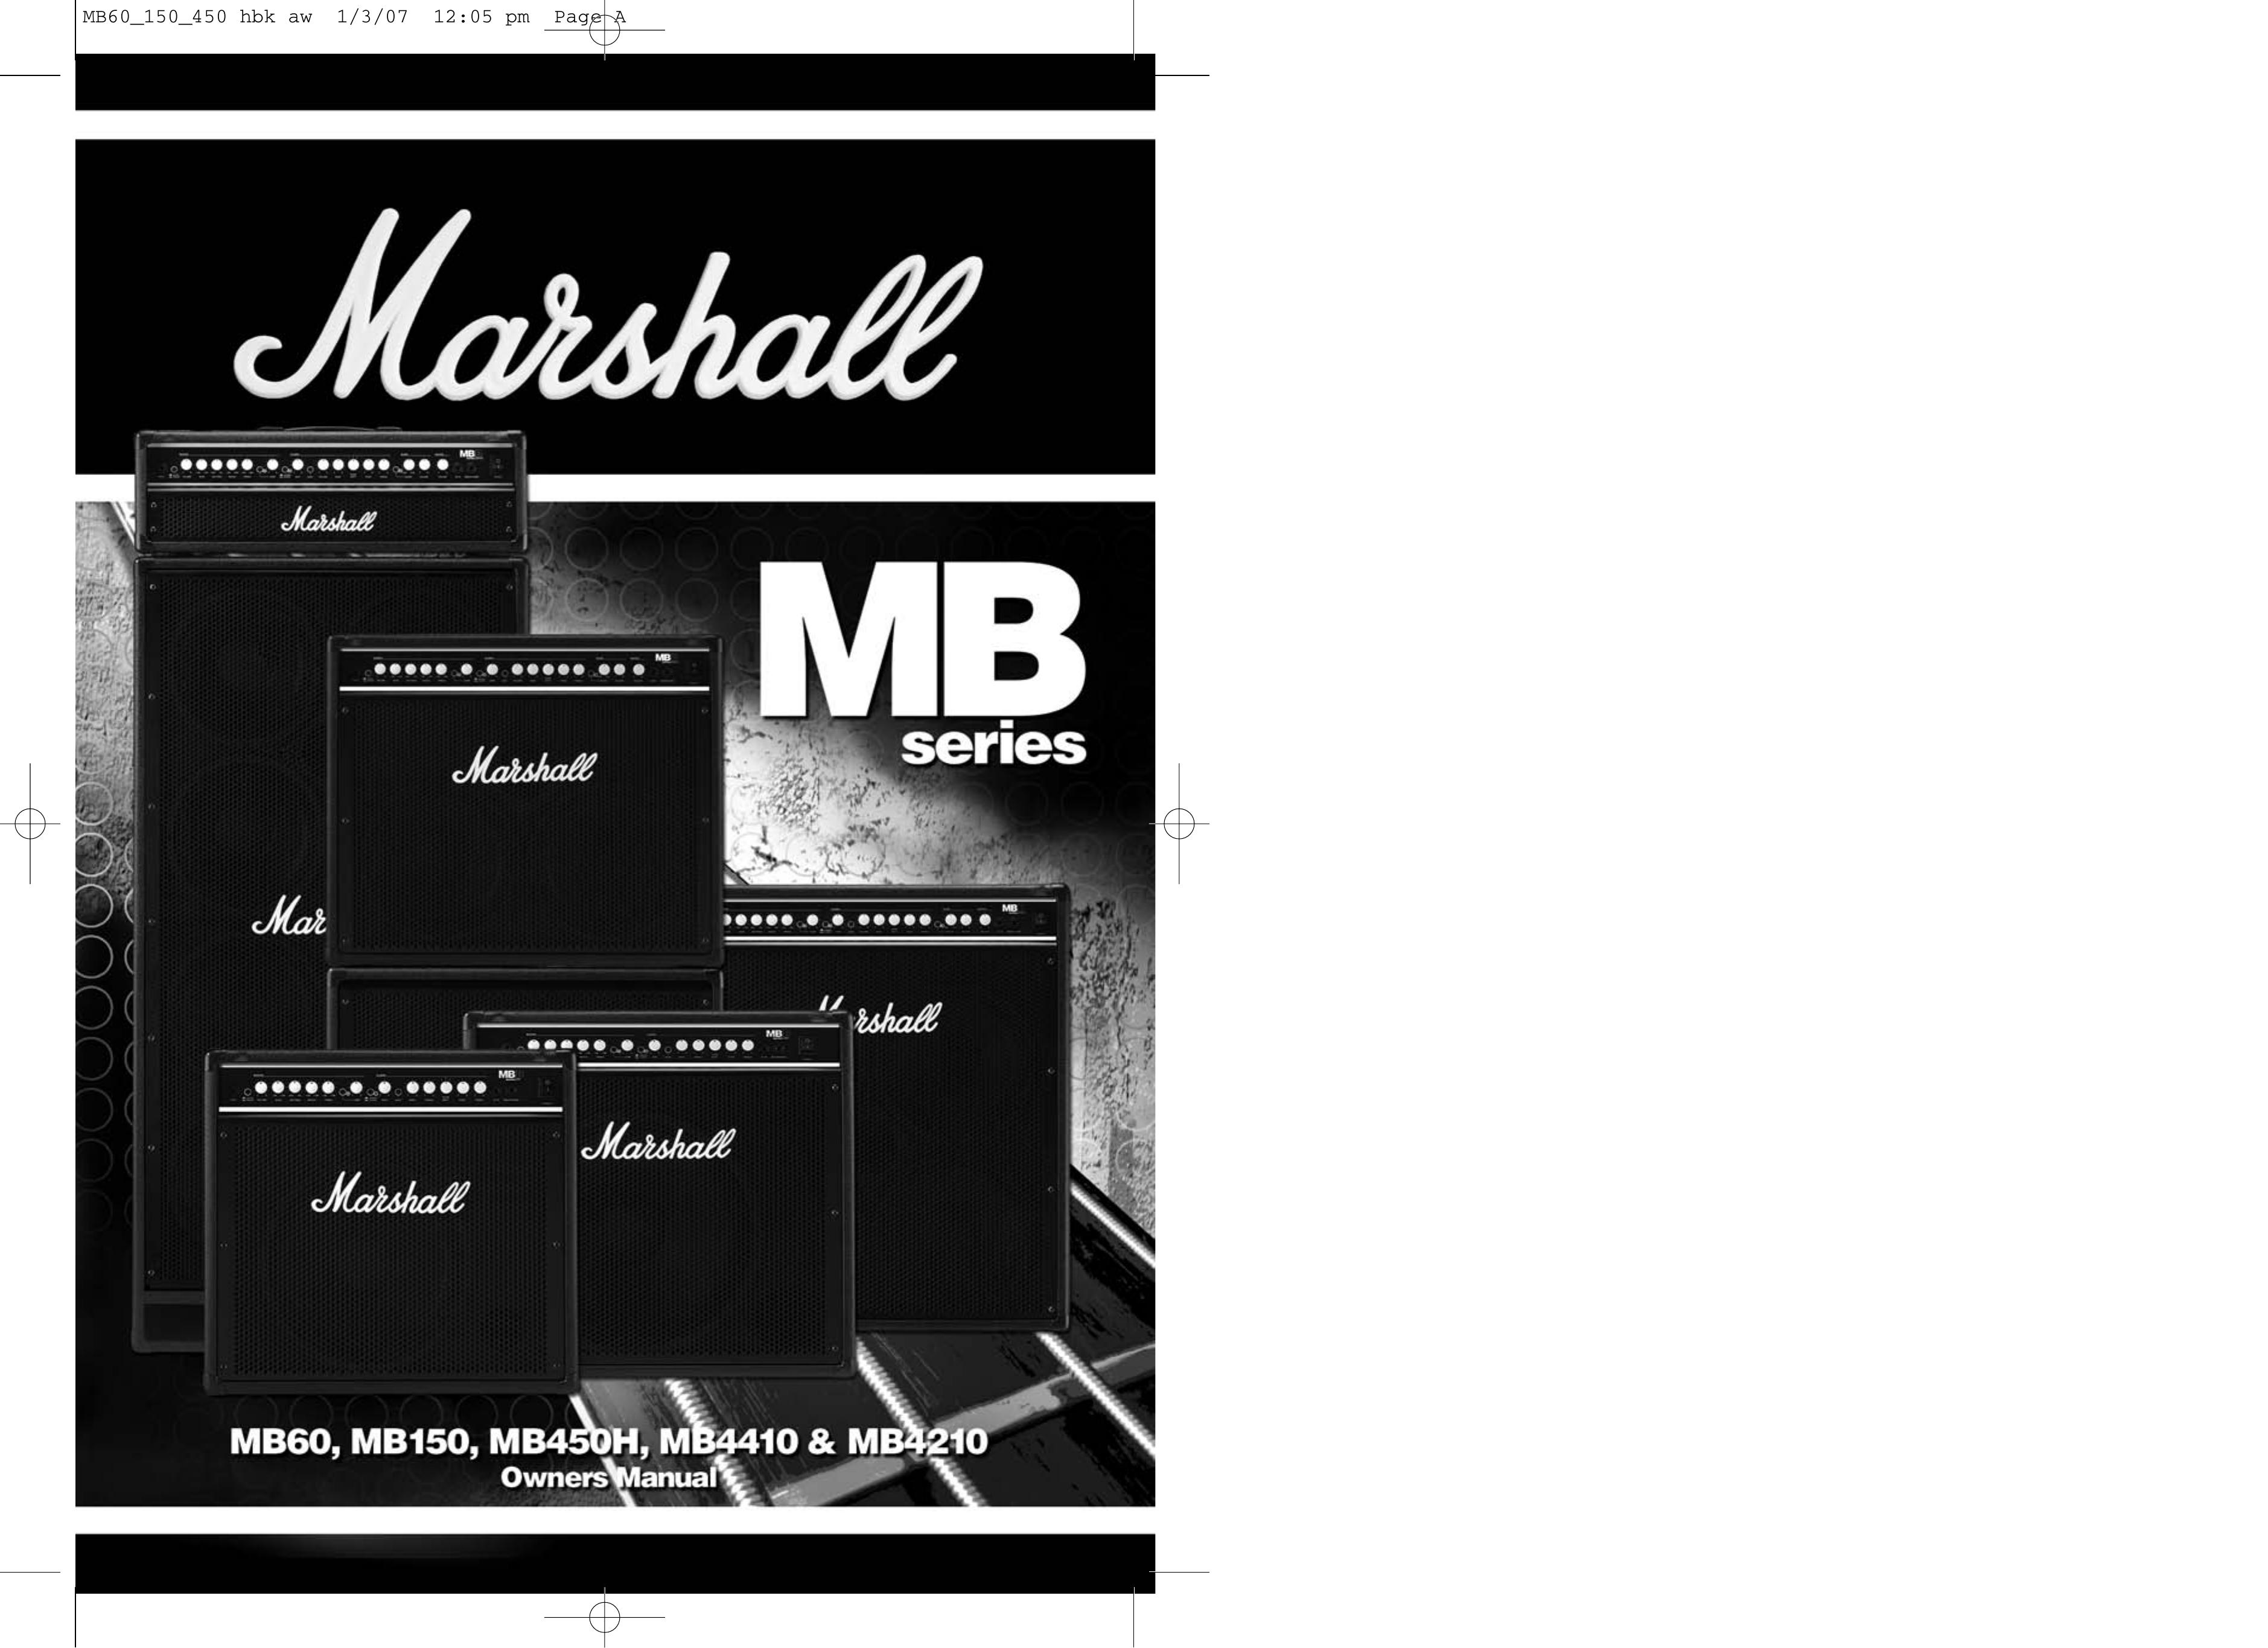 Marshall Amplification MB4210 Musical Instrument Amplifier User Manual